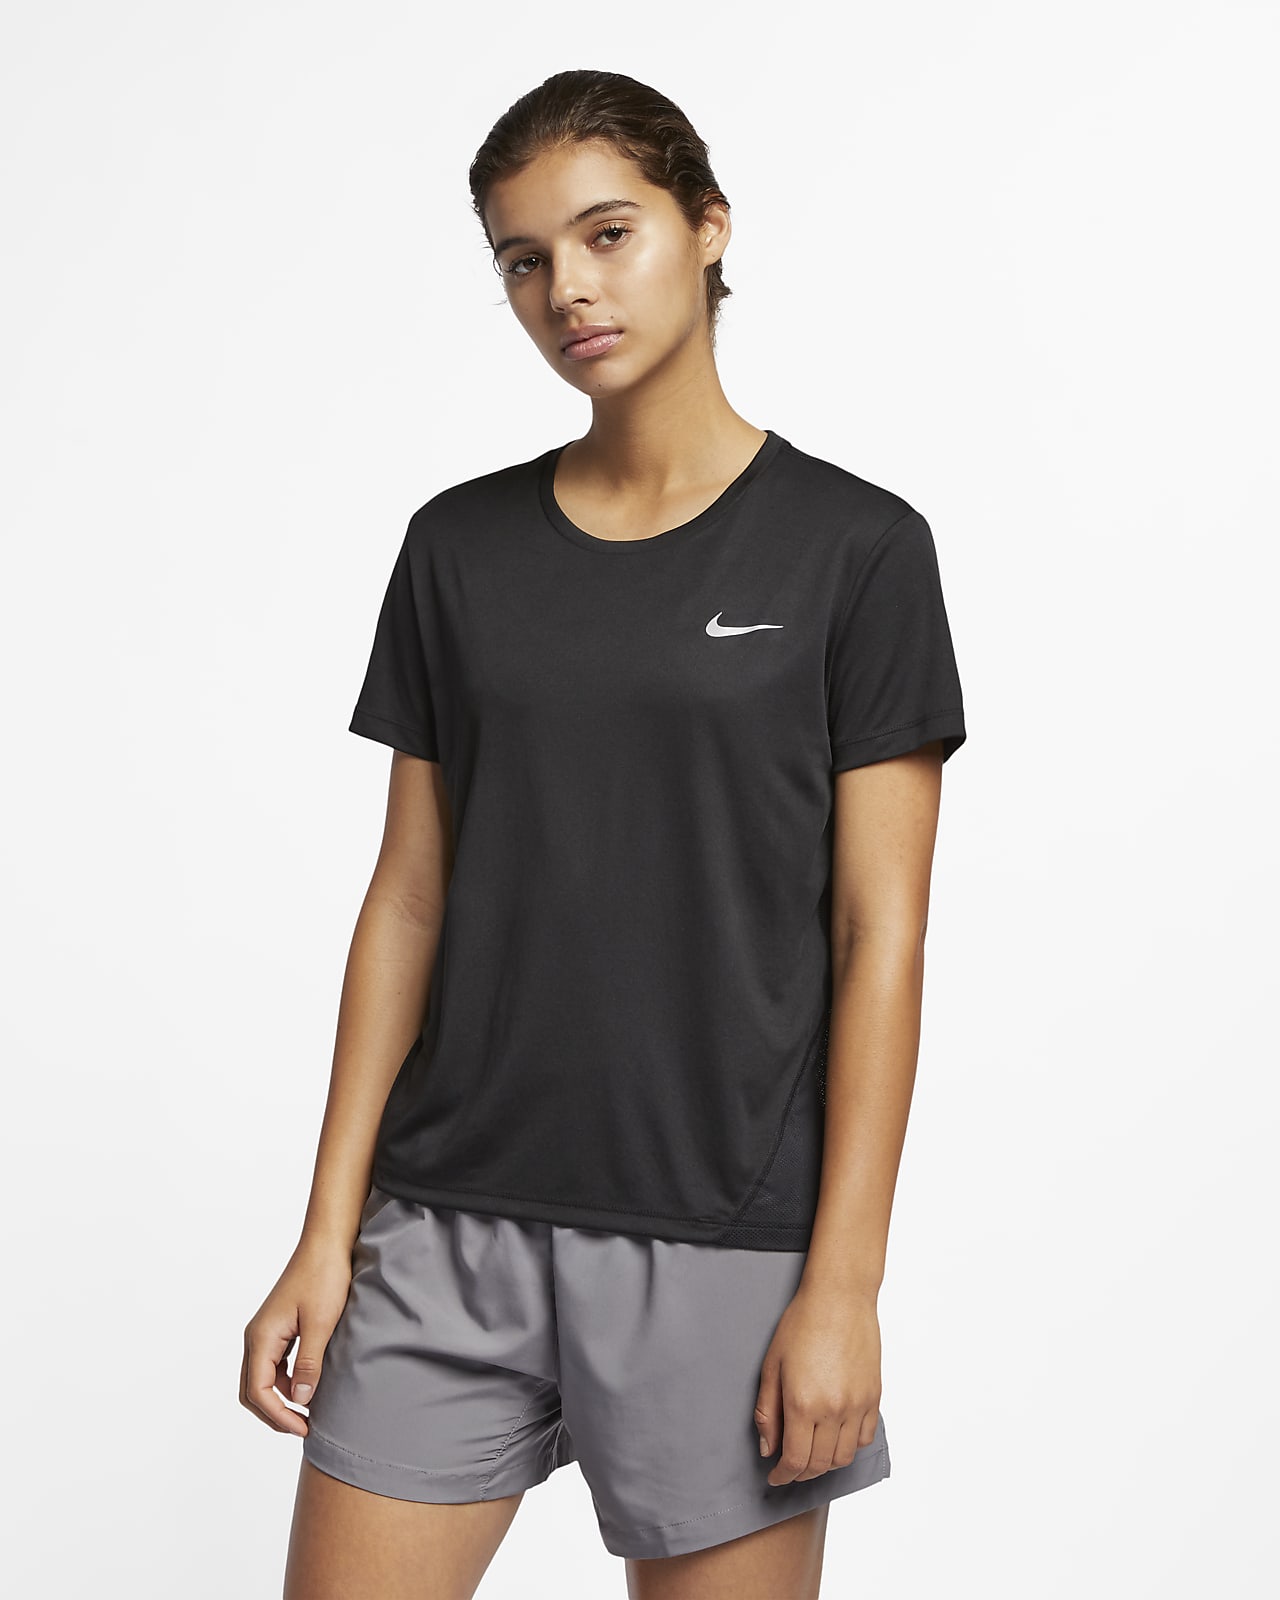 Nike Short-Sleeve Running Top.